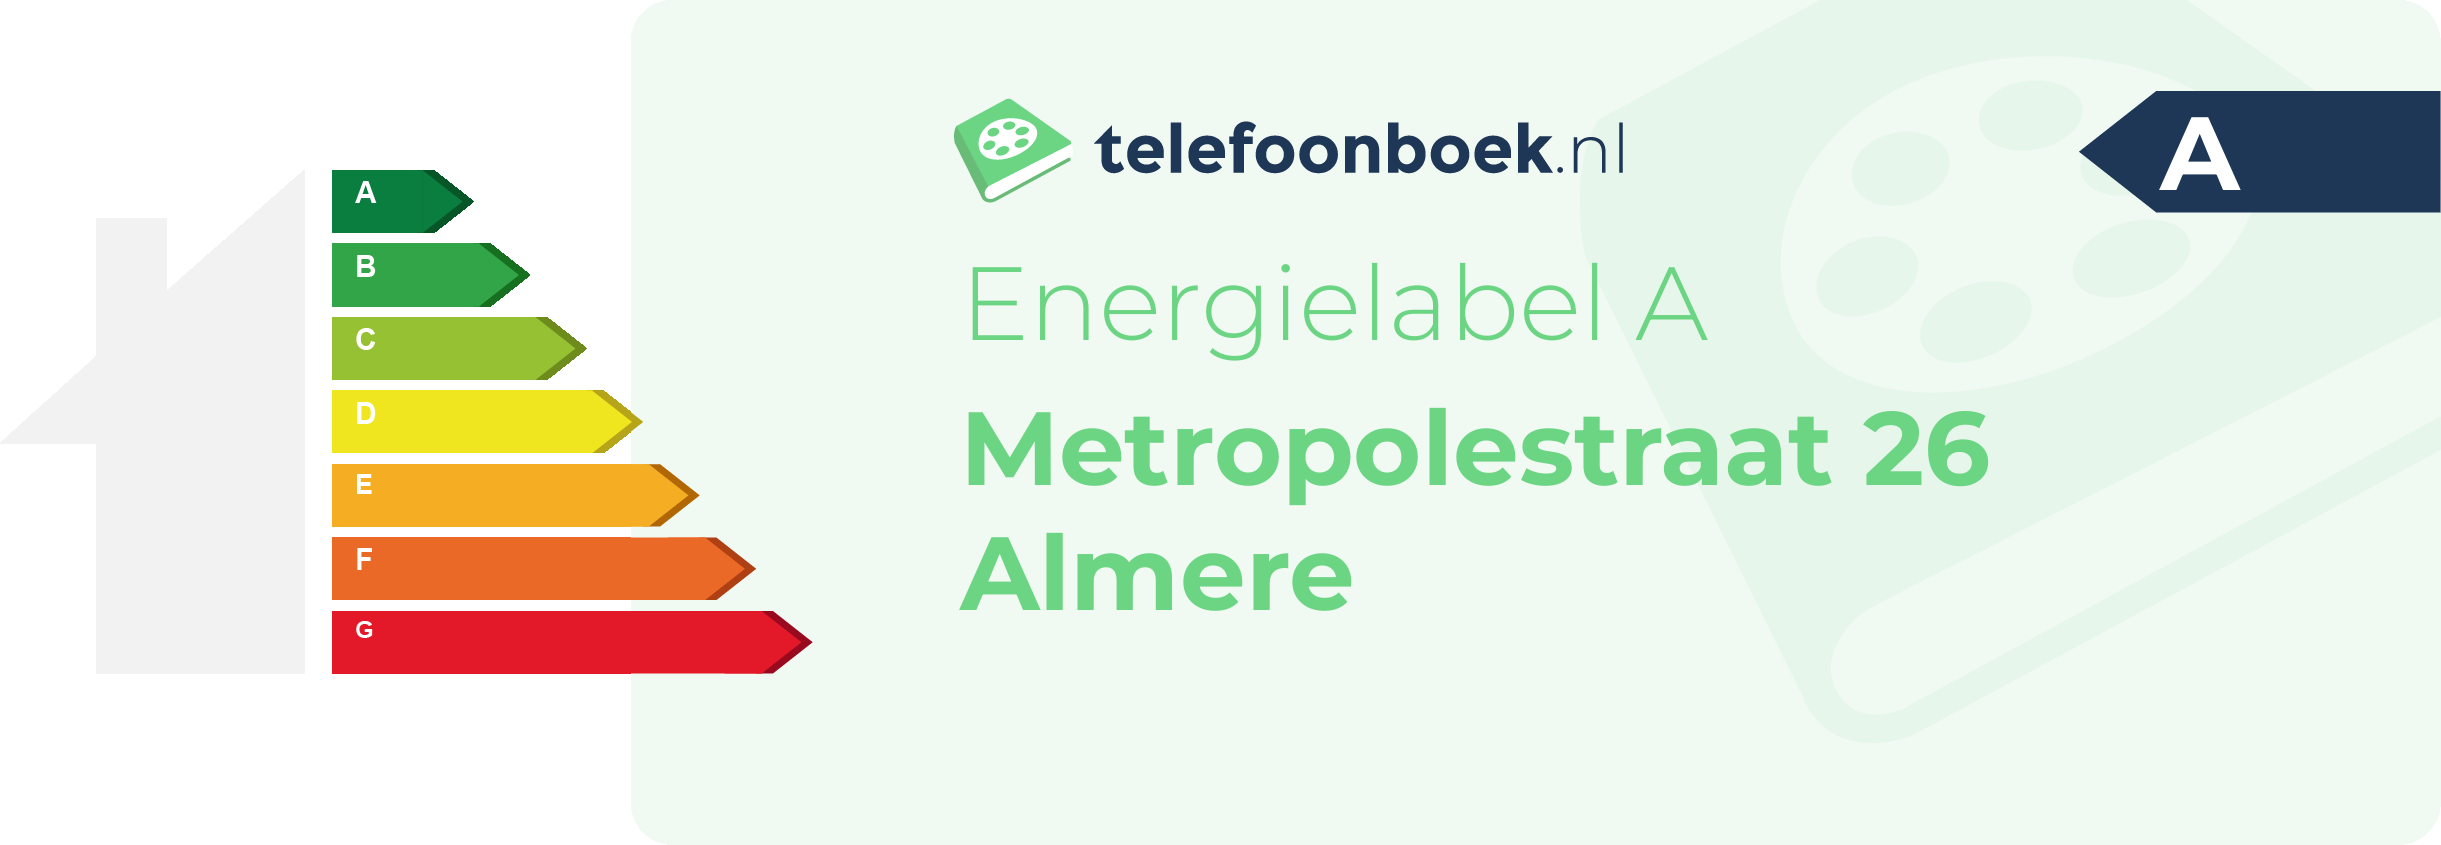 Energielabel Metropolestraat 26 Almere